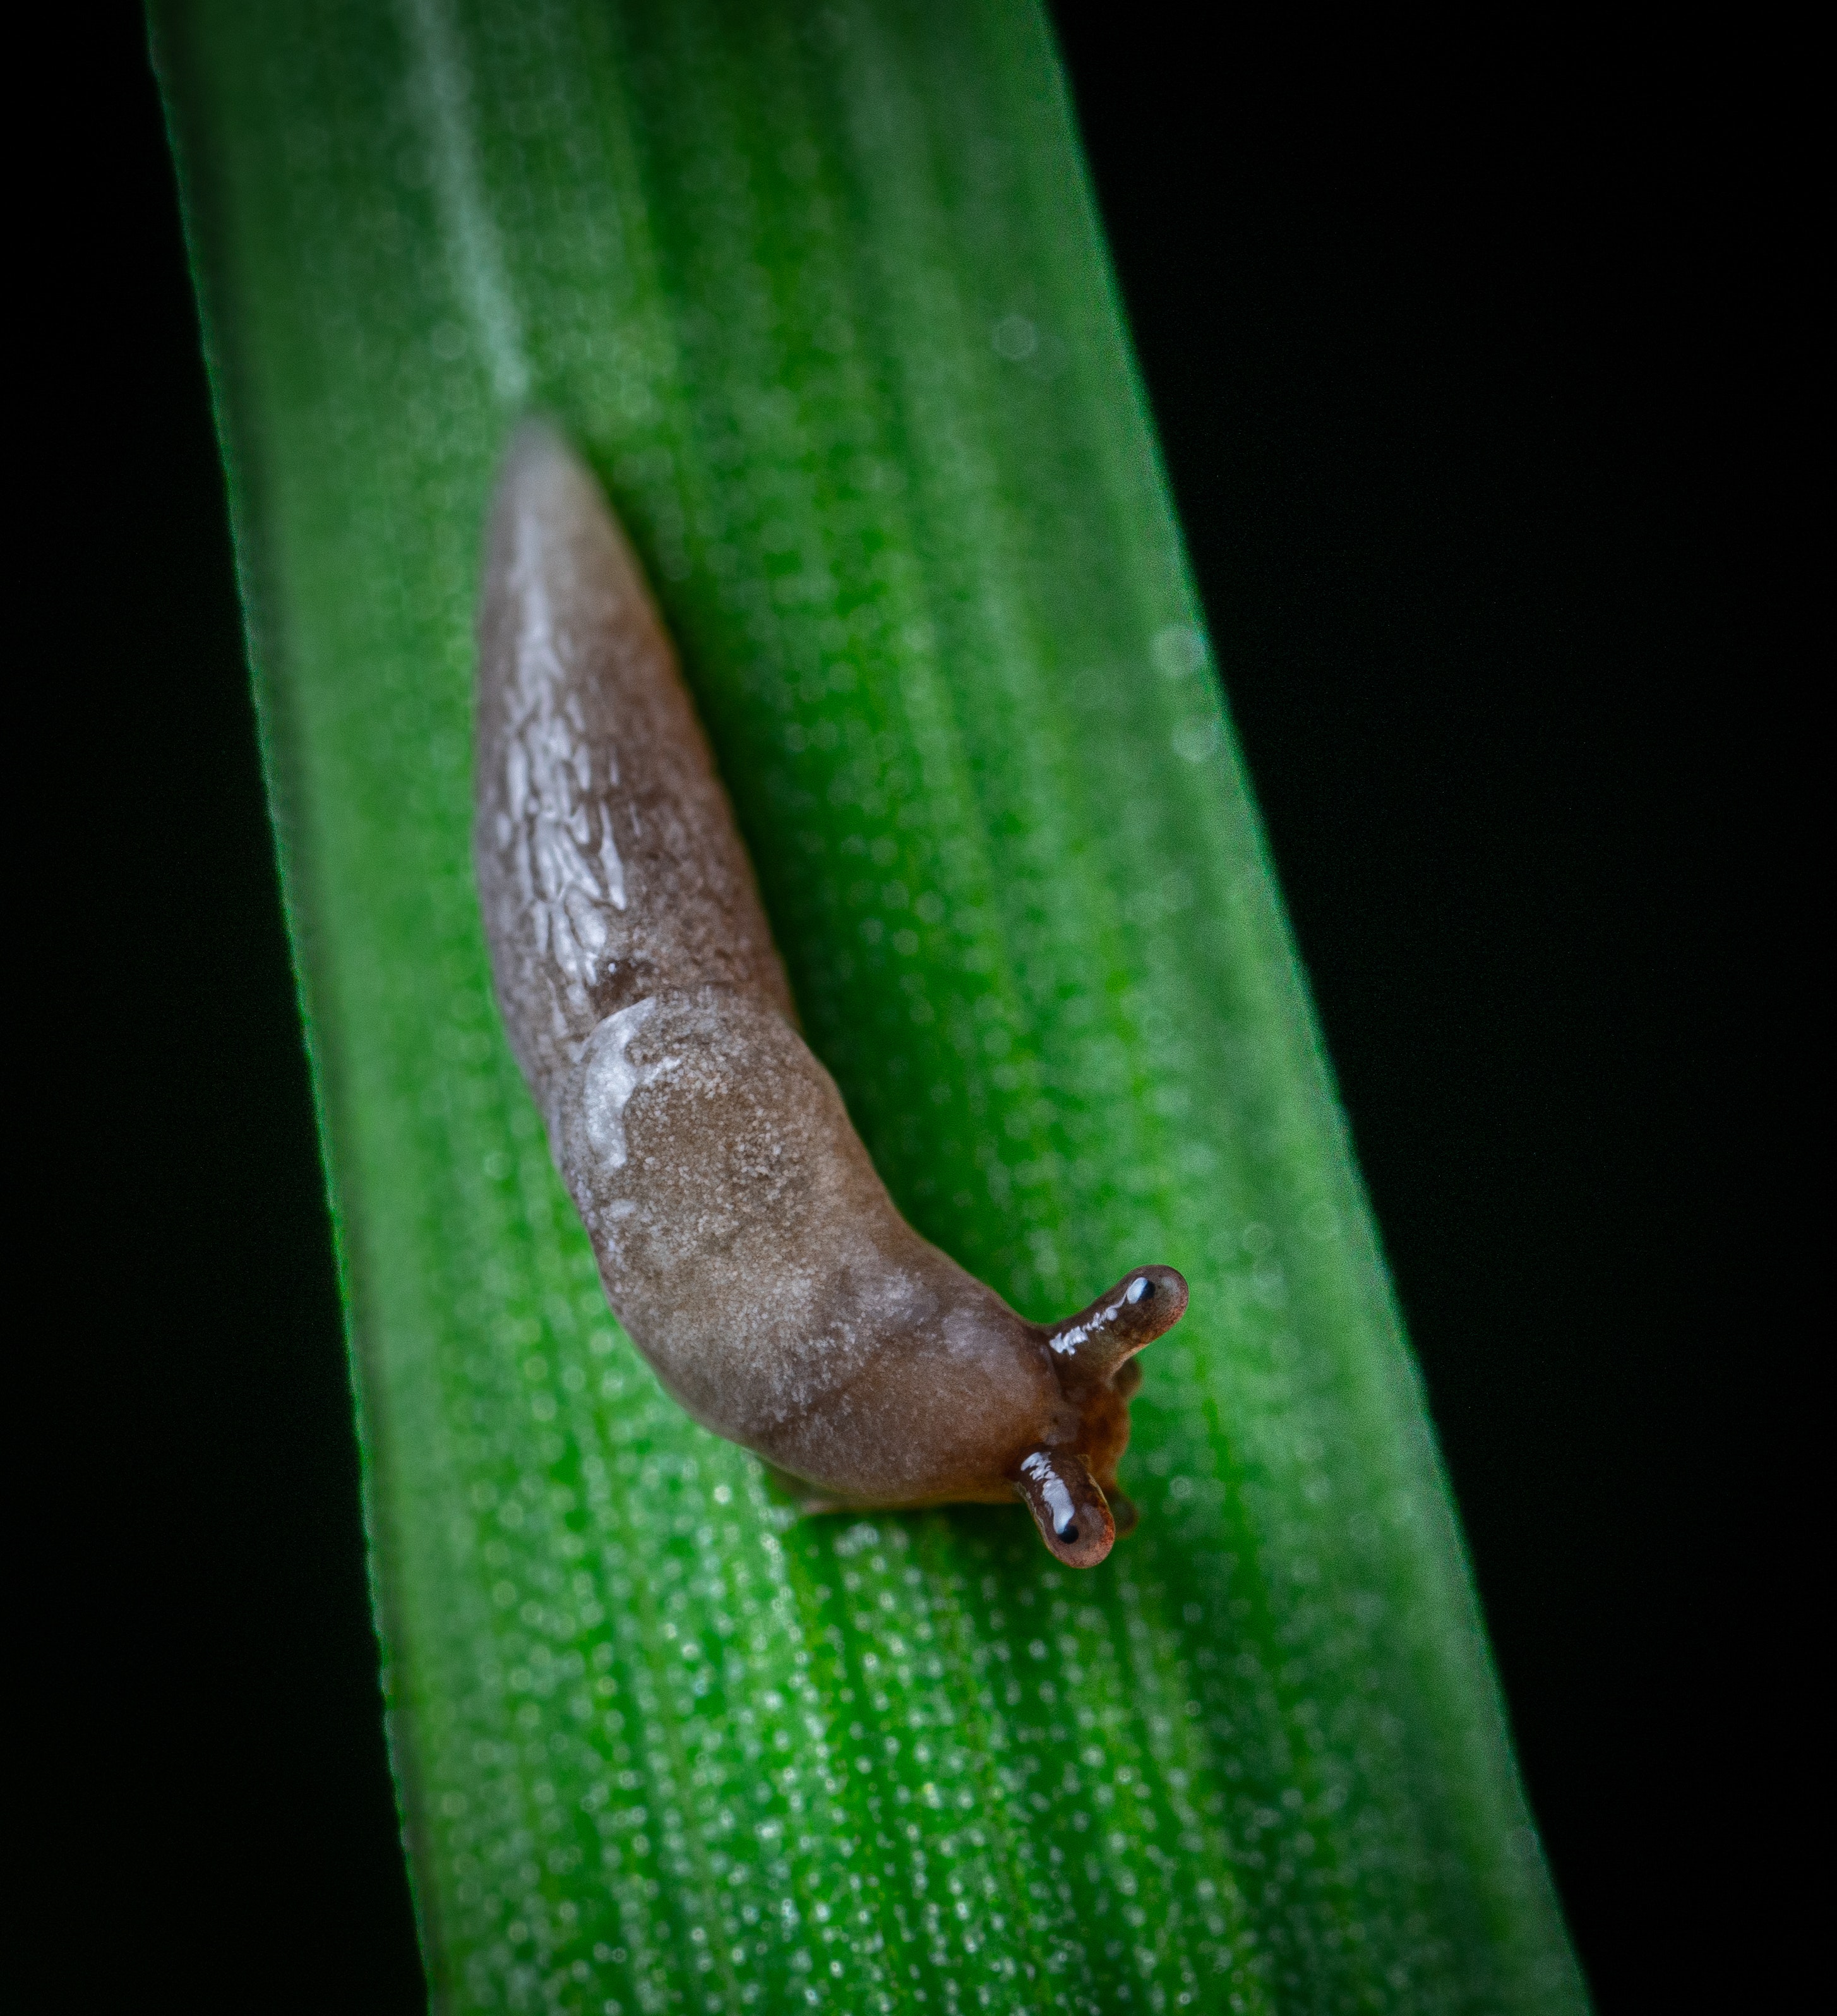 phot of slug